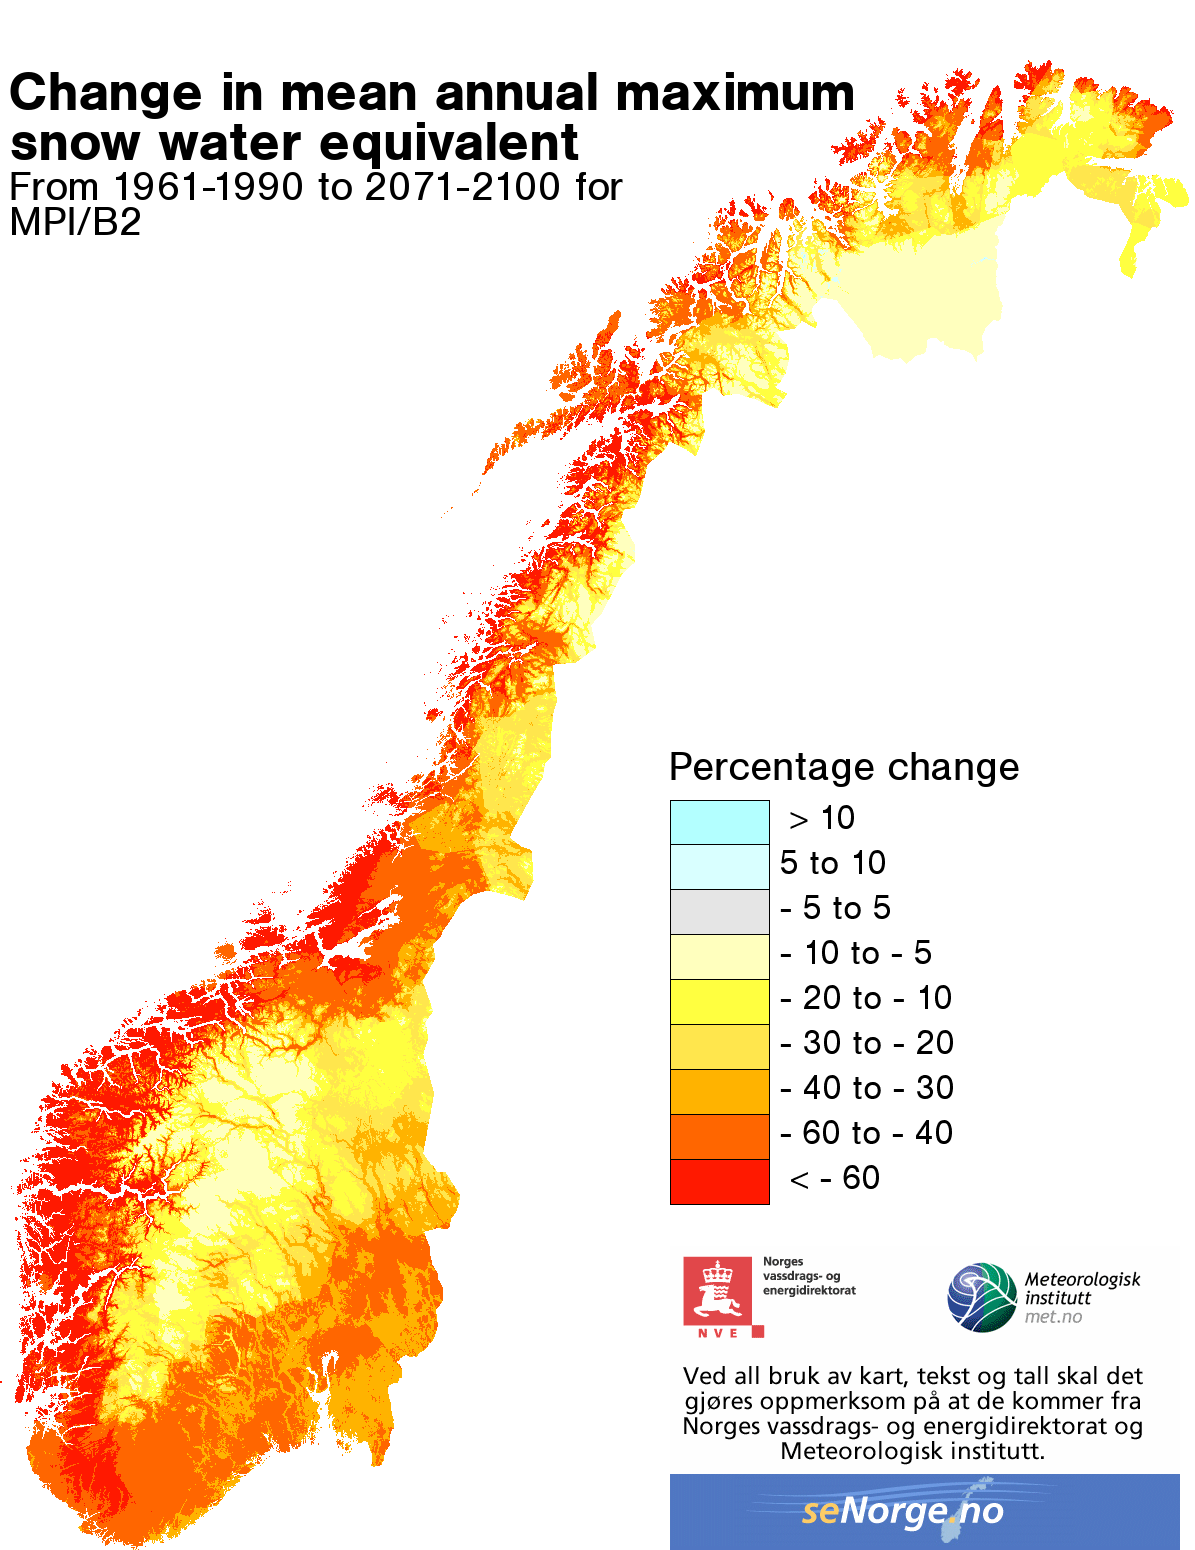 Endring i årlig maksverdi for snøens vannekvivalent 1981-1999 til 2031-2049, M92